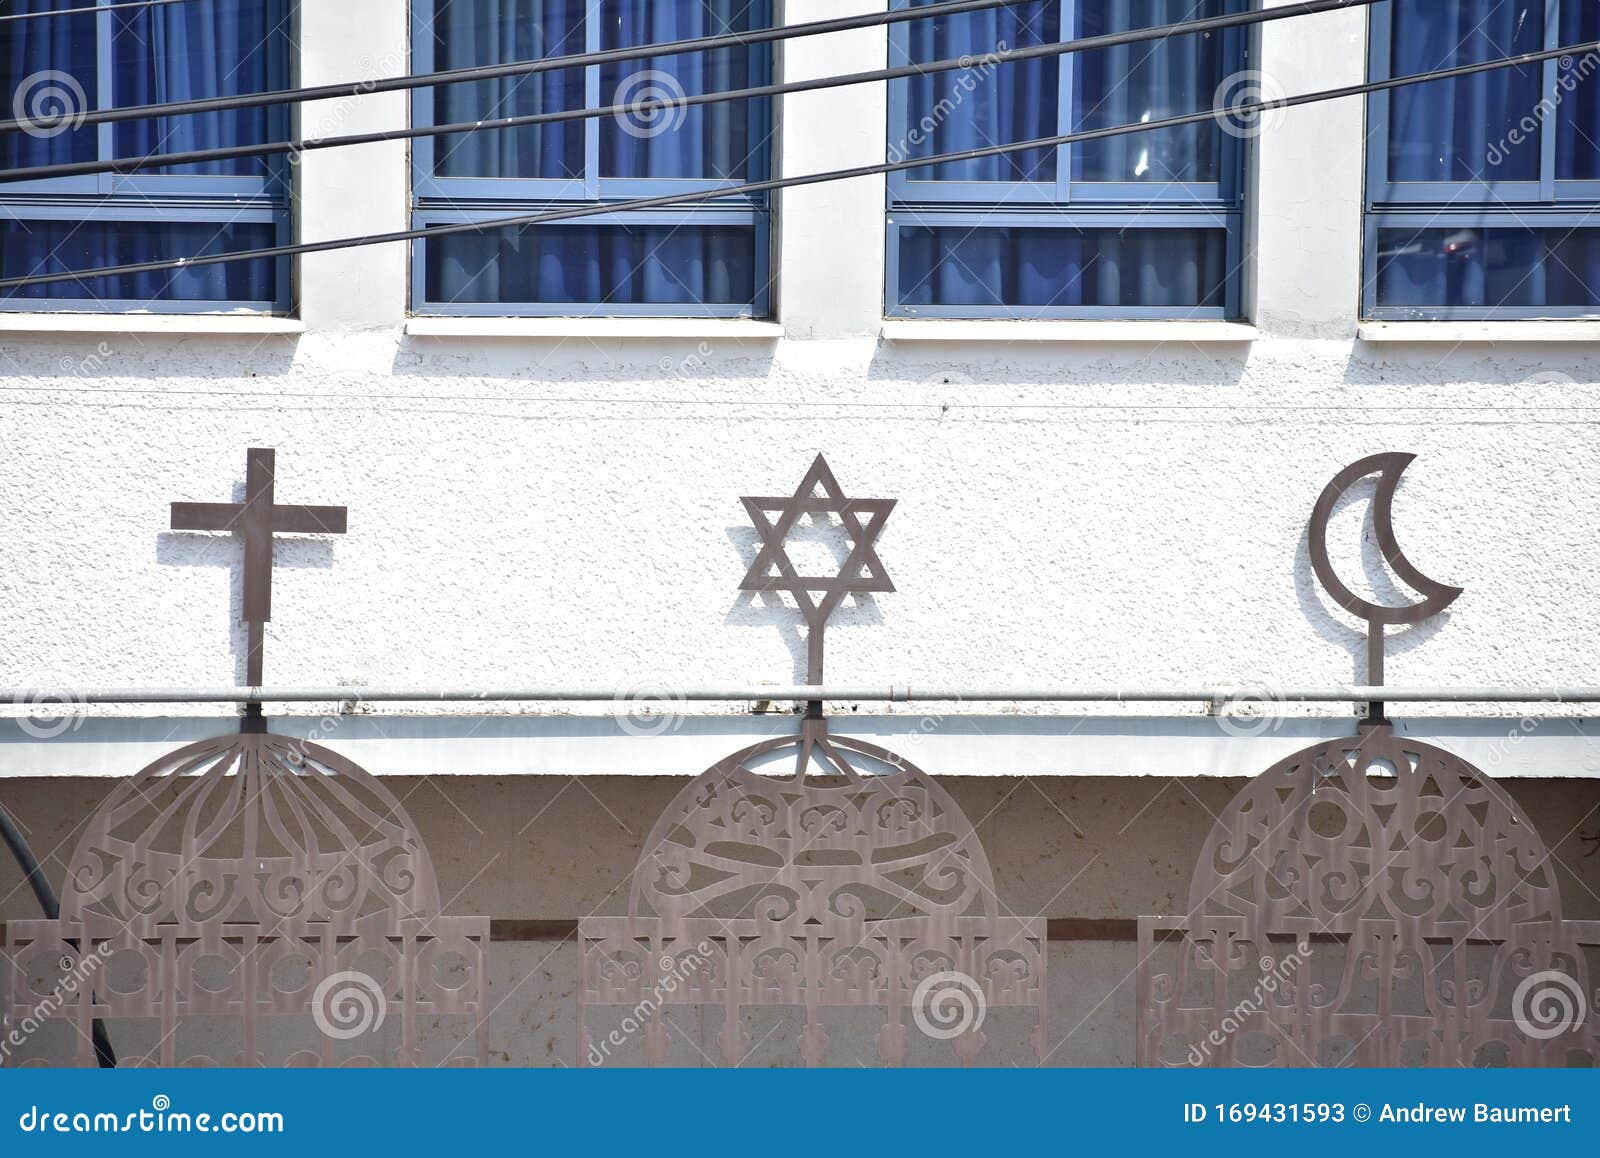 signs of the three monotheistic religions haifa israel